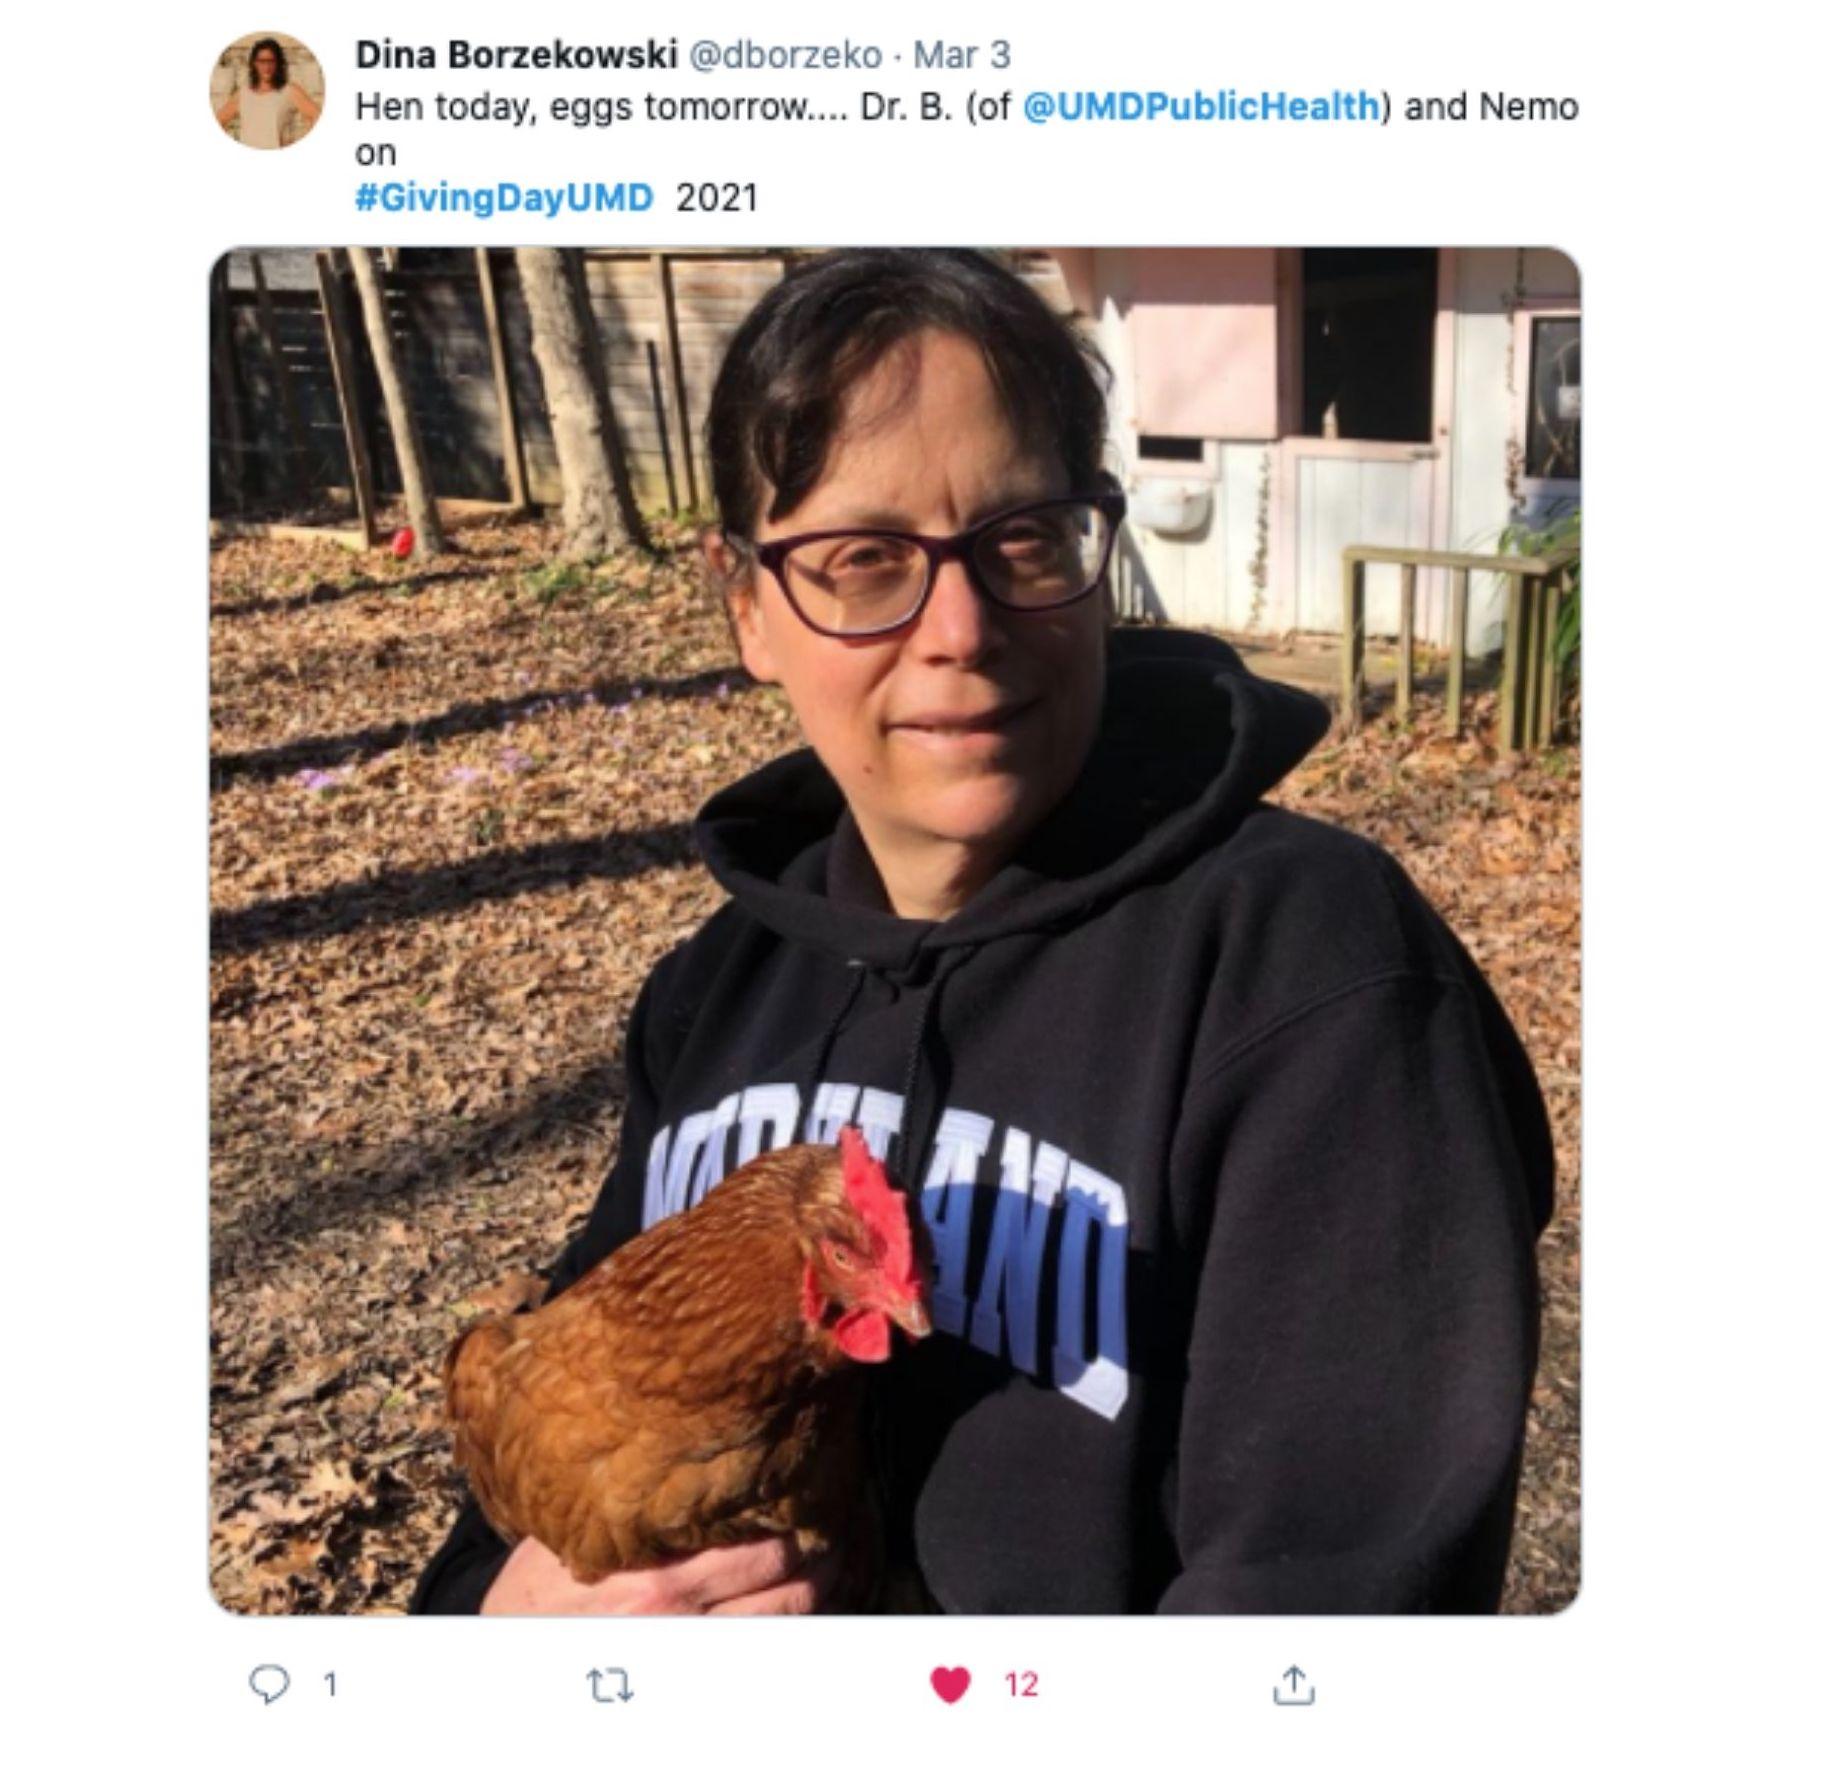 Dina Borzekowski Giving Day 2021 Tweet from the University of Maryland